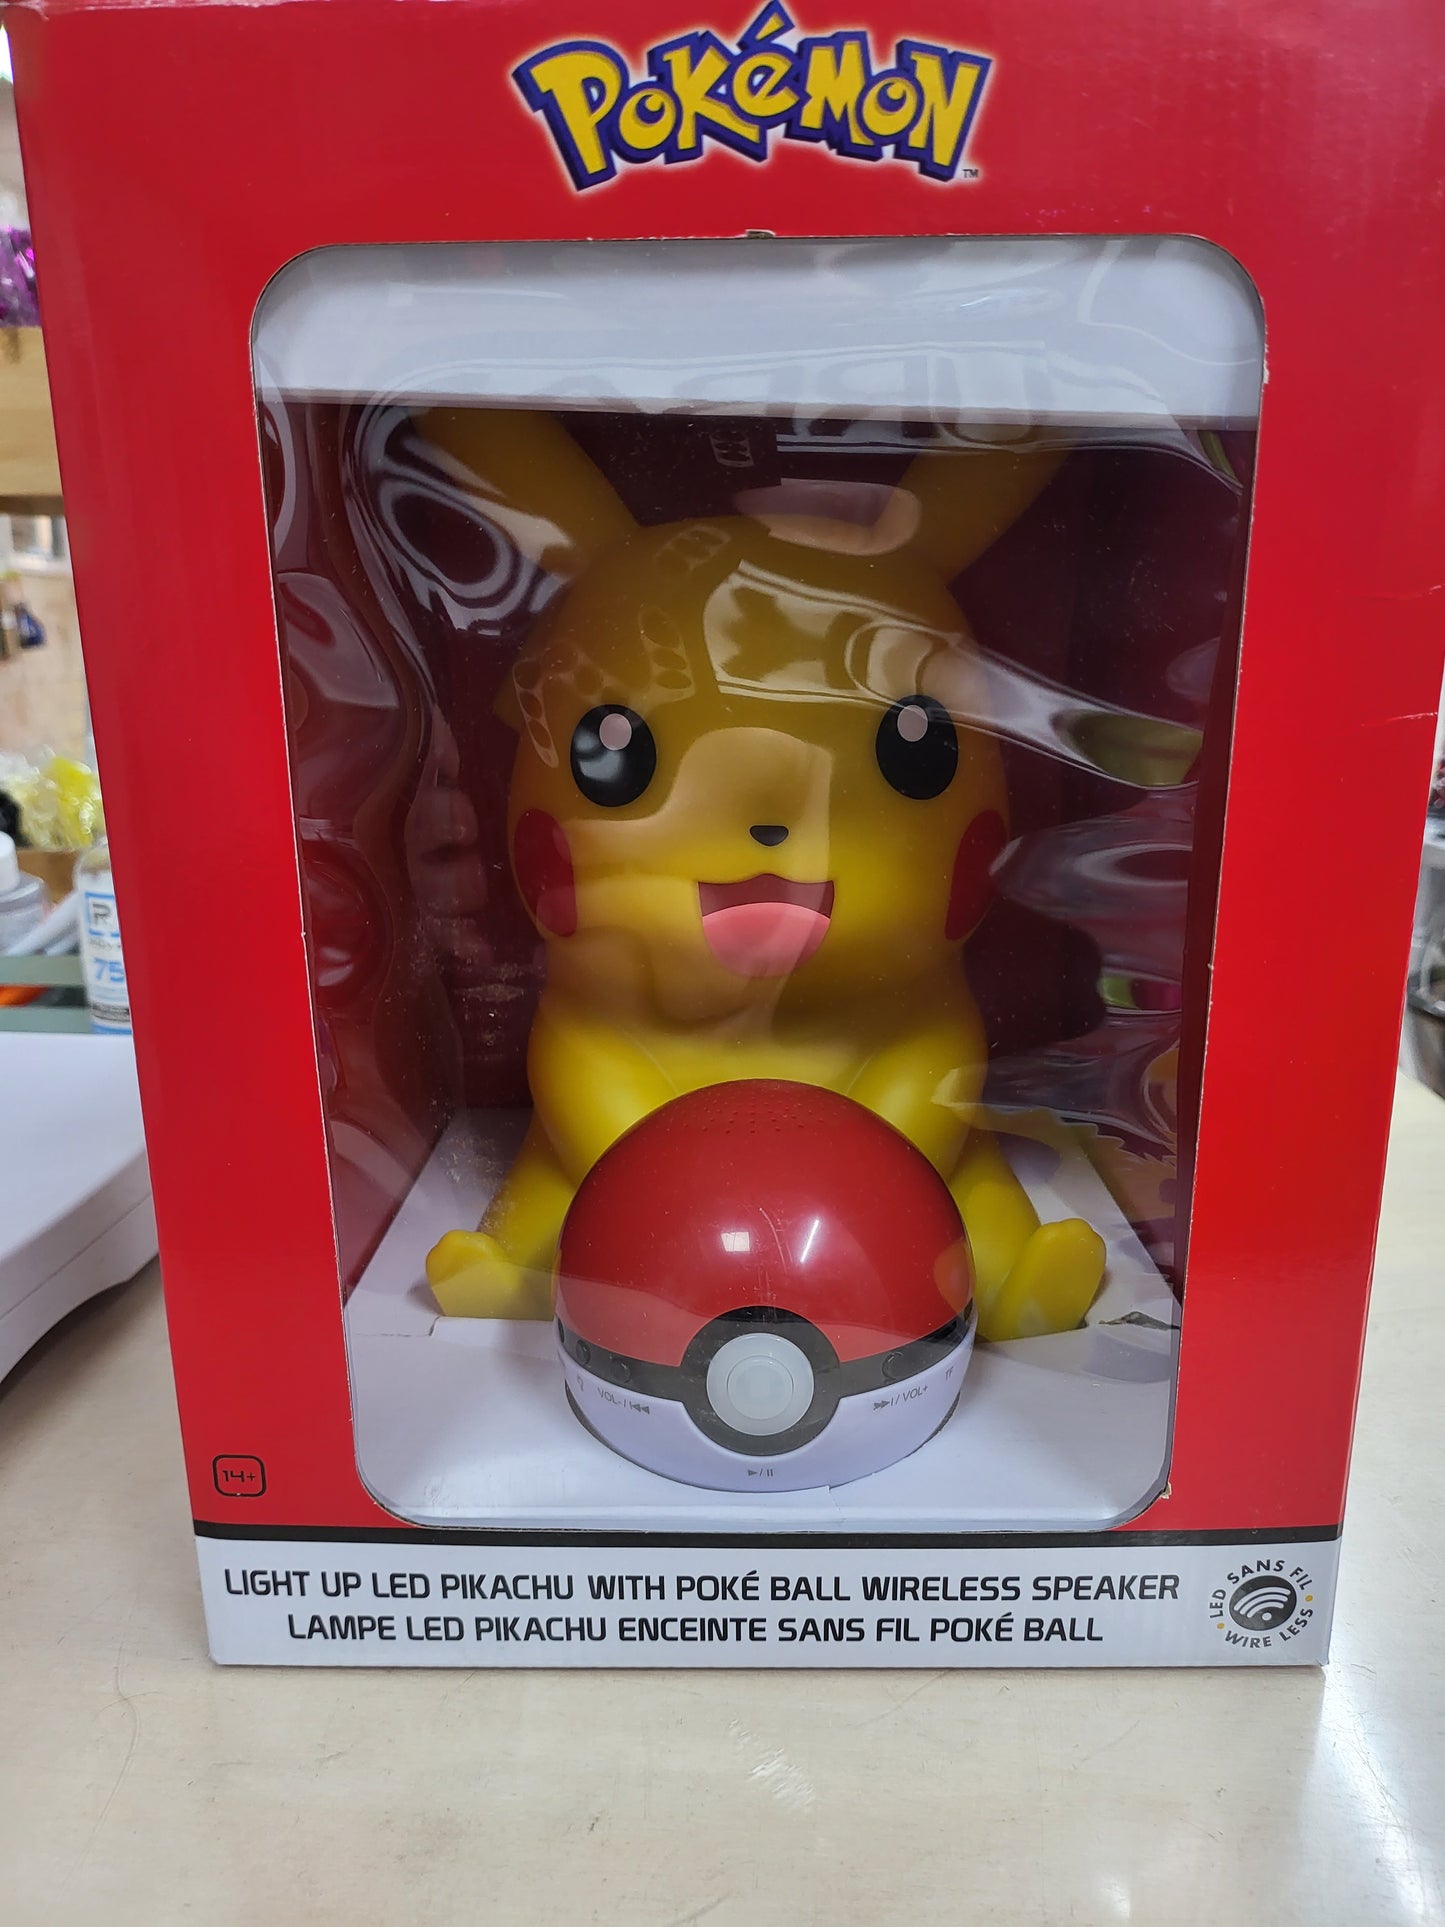 Speaker wireless lampada pokemon pikachu